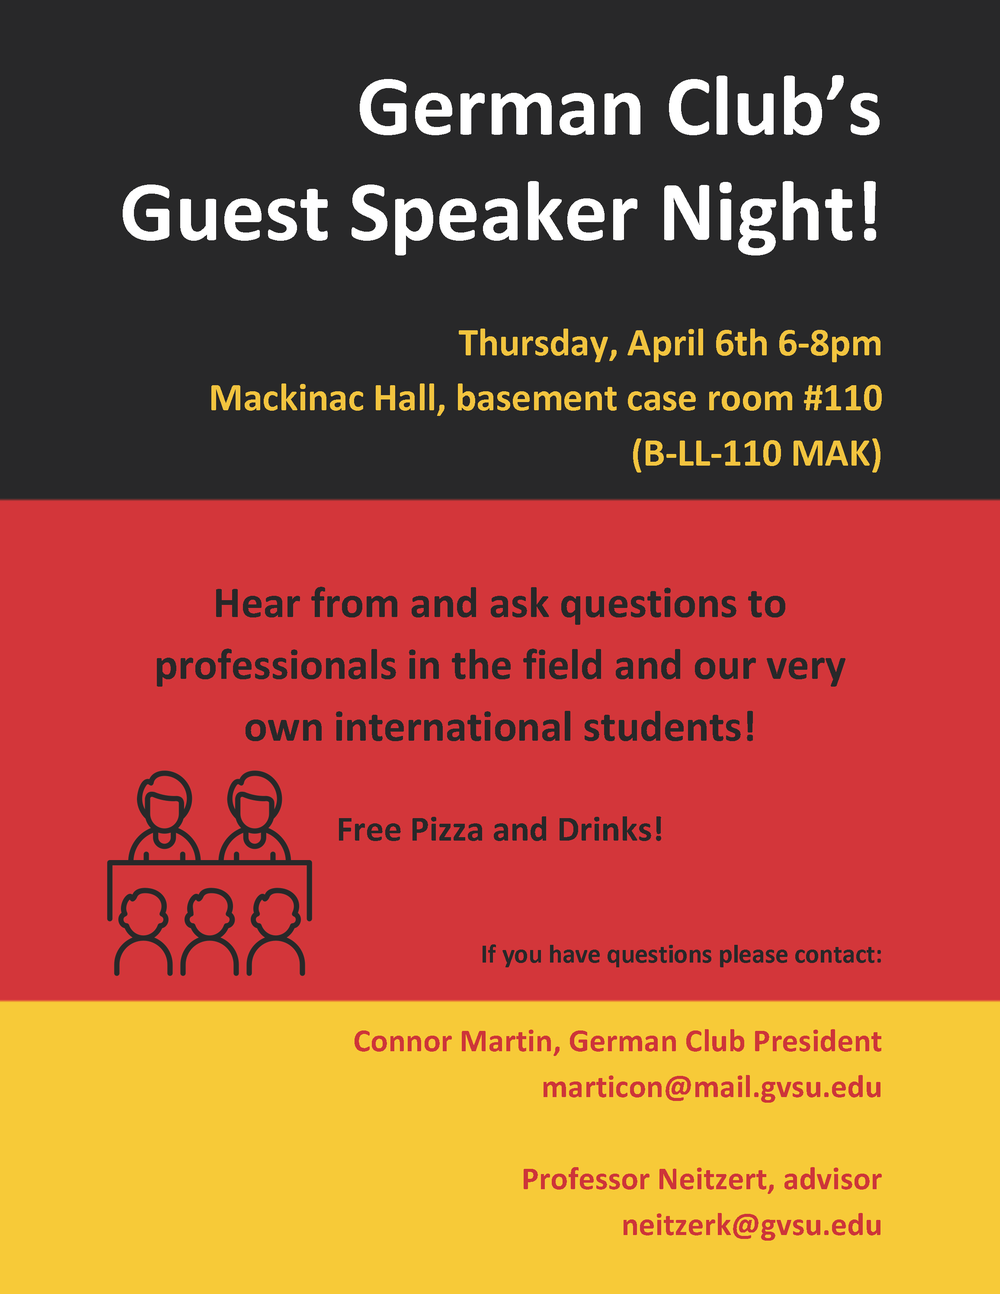 German Club's Guest Speaker Night! Spotlight